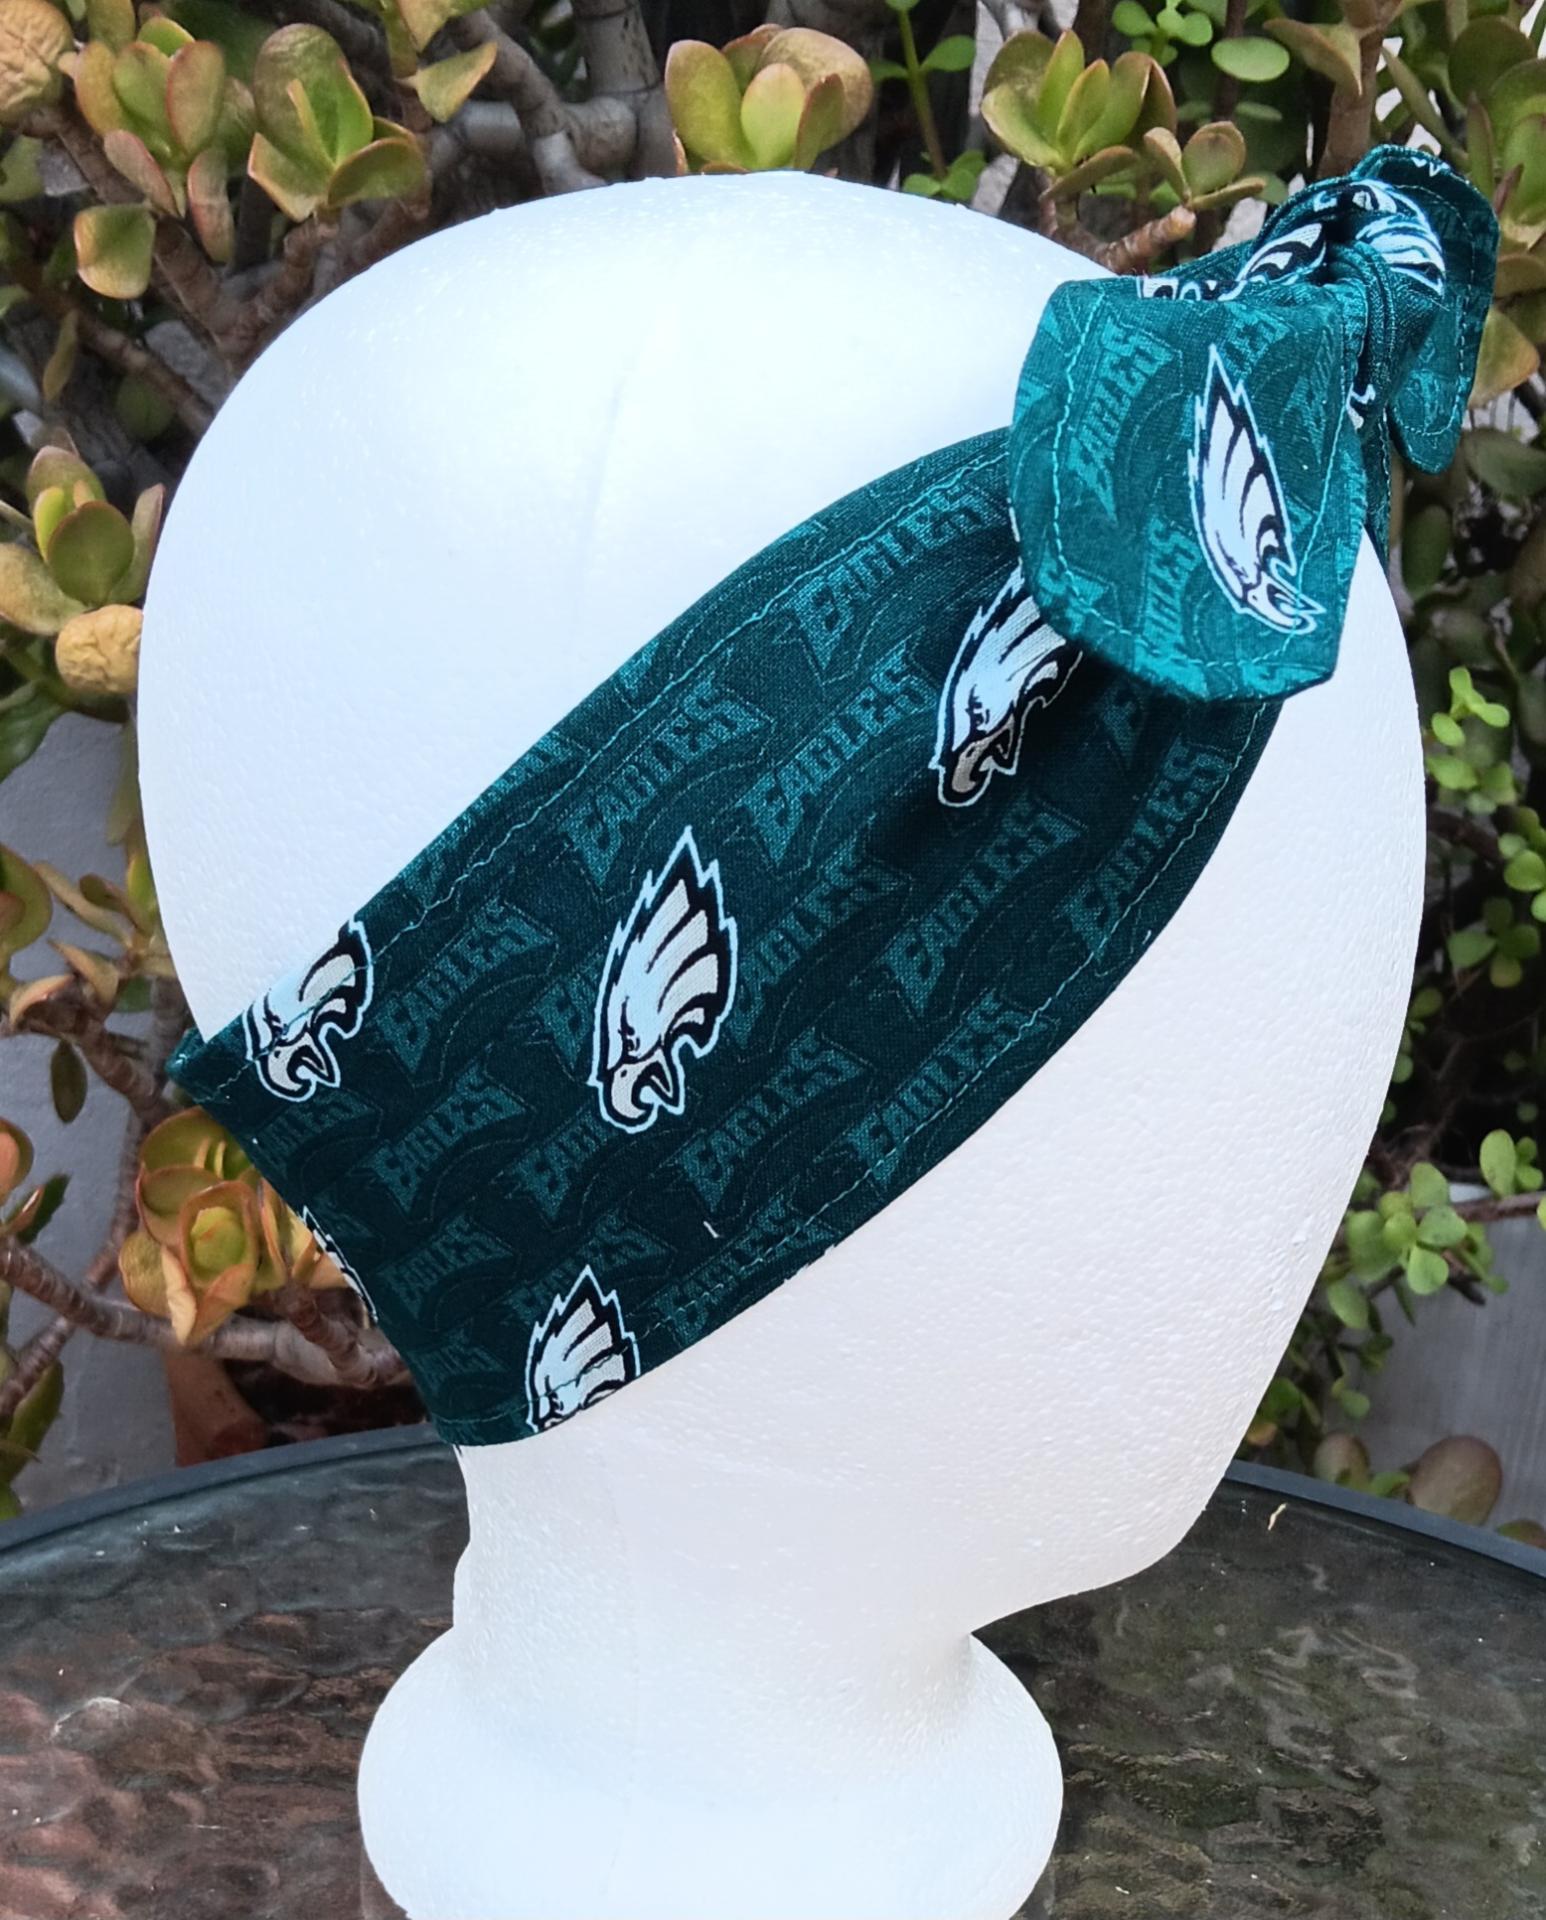 3” wide Philadelphia Eagles headband, self tie, hair wrap, hair tie, pin up, scarf, bandana, retro, rockabilly